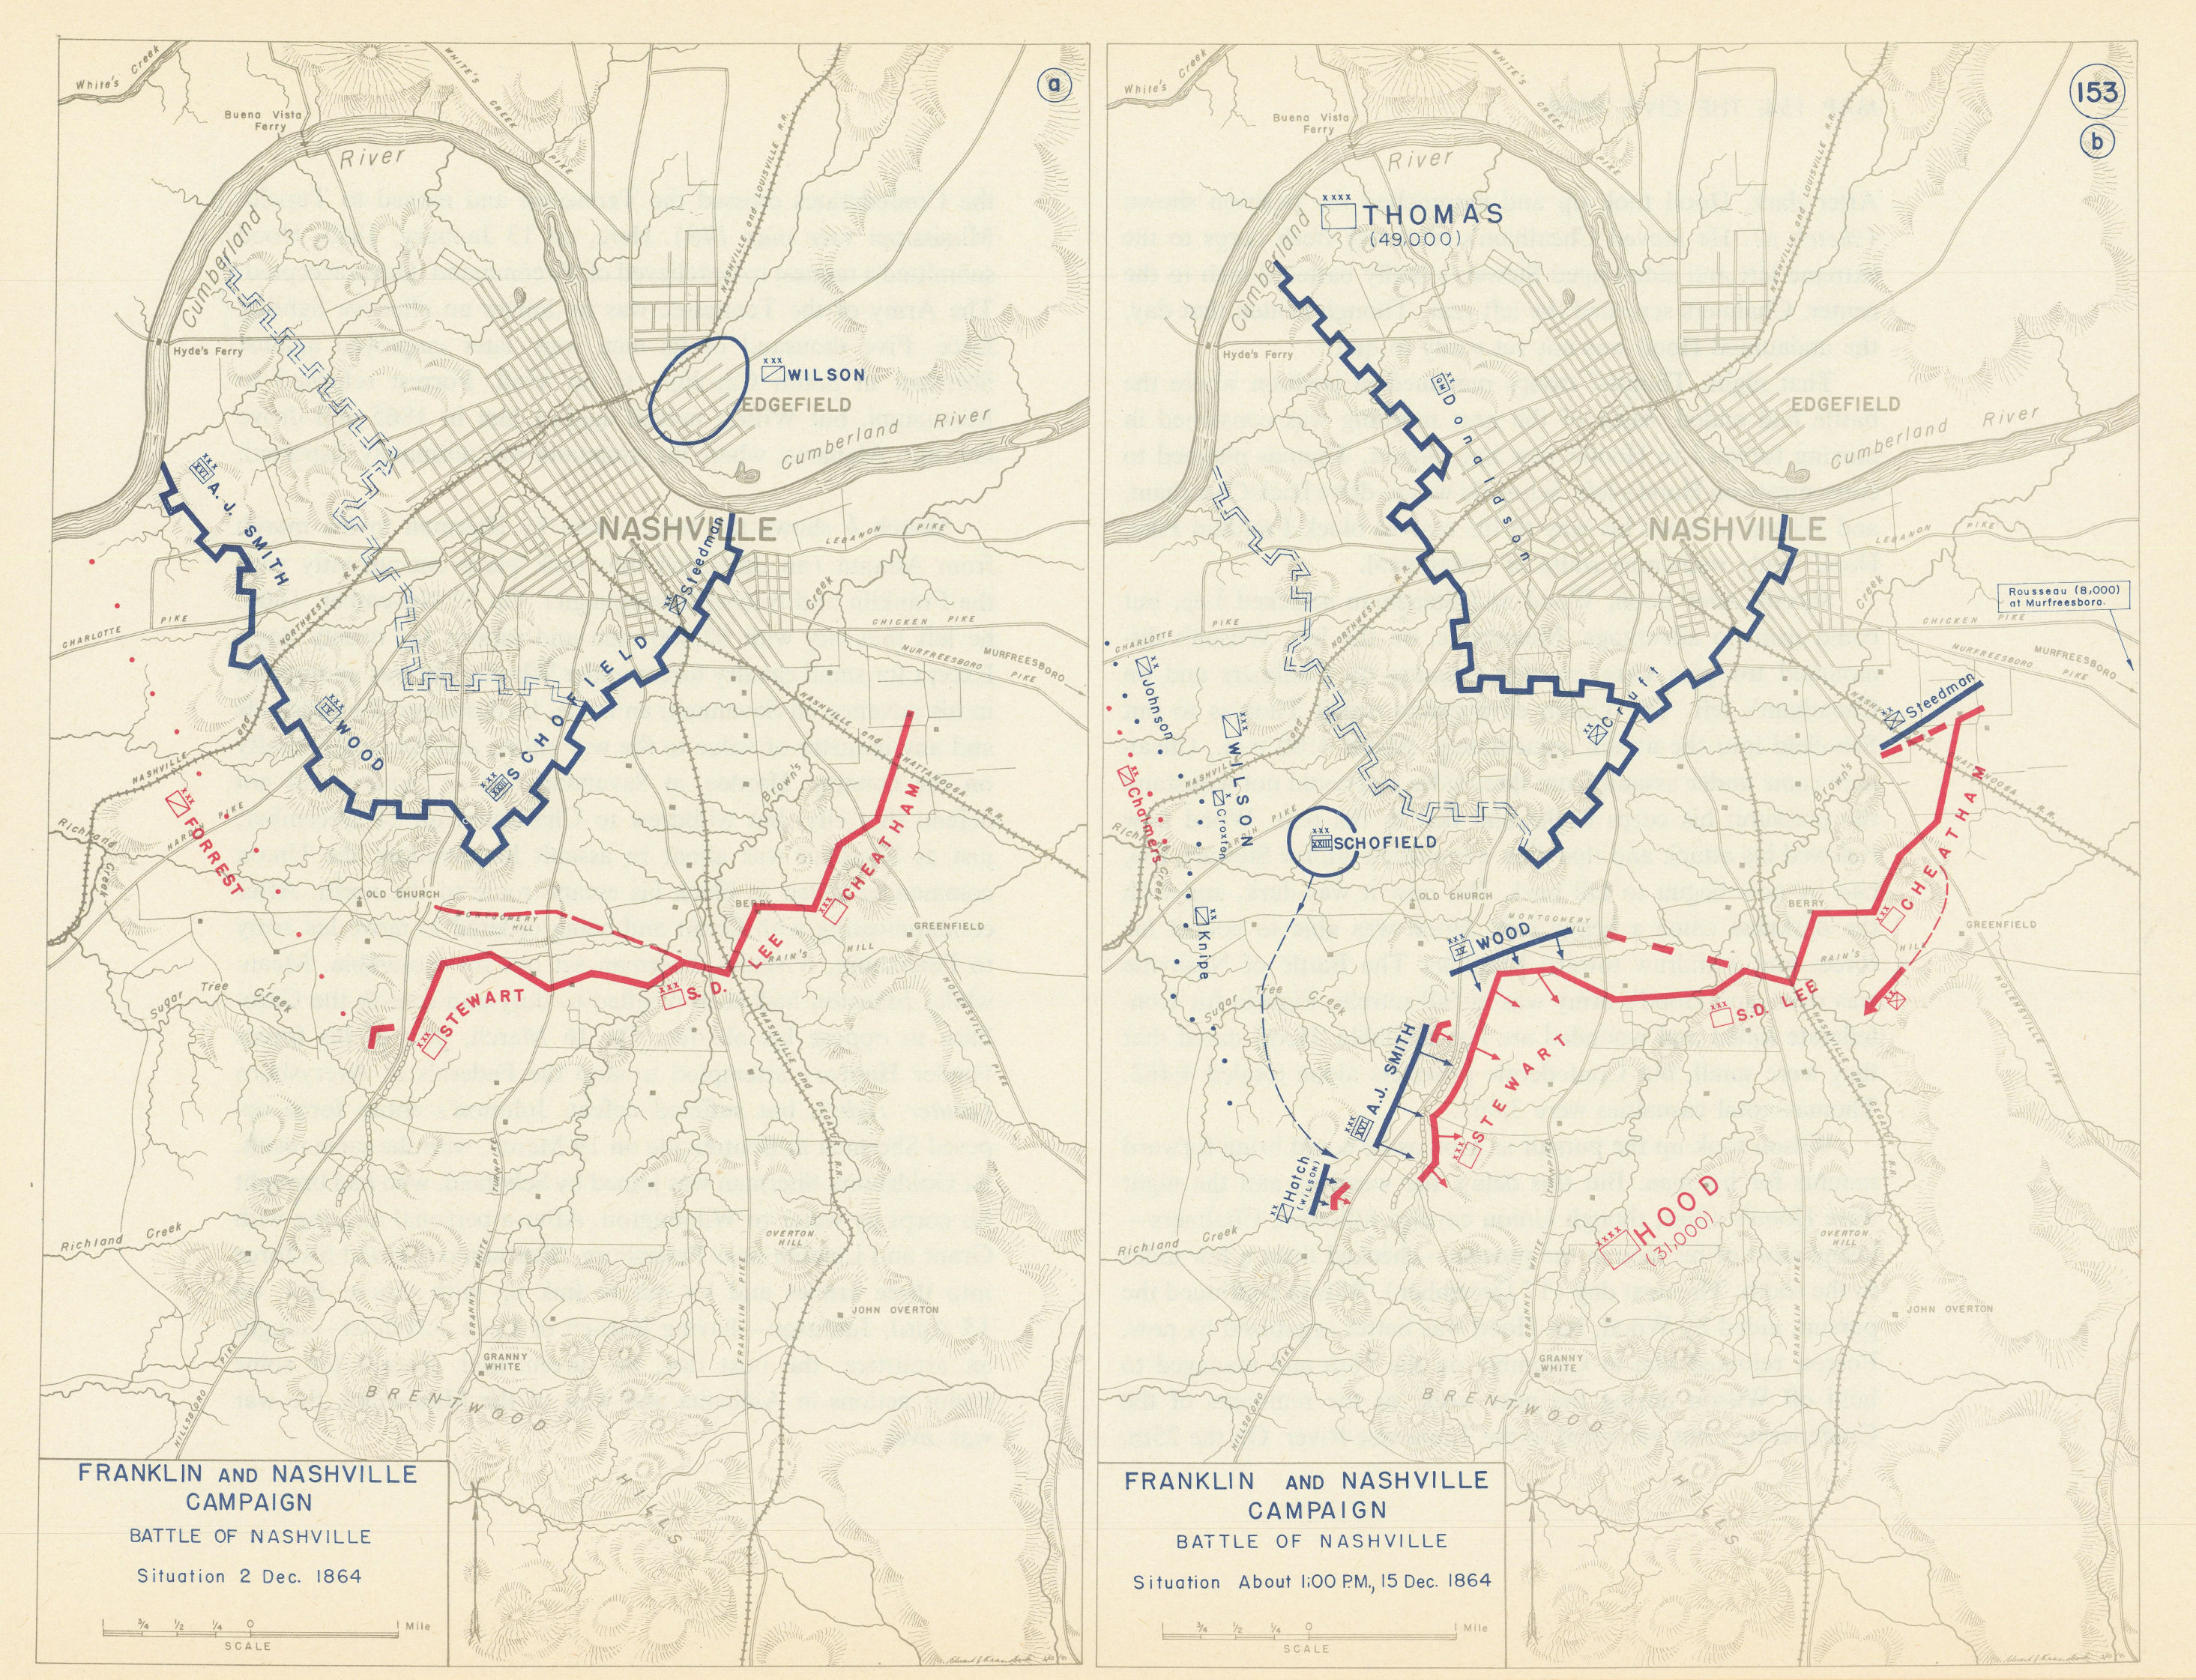 American Civil War. 2-15 December 1864. Battle of Nashville. Tennessee 1959 map